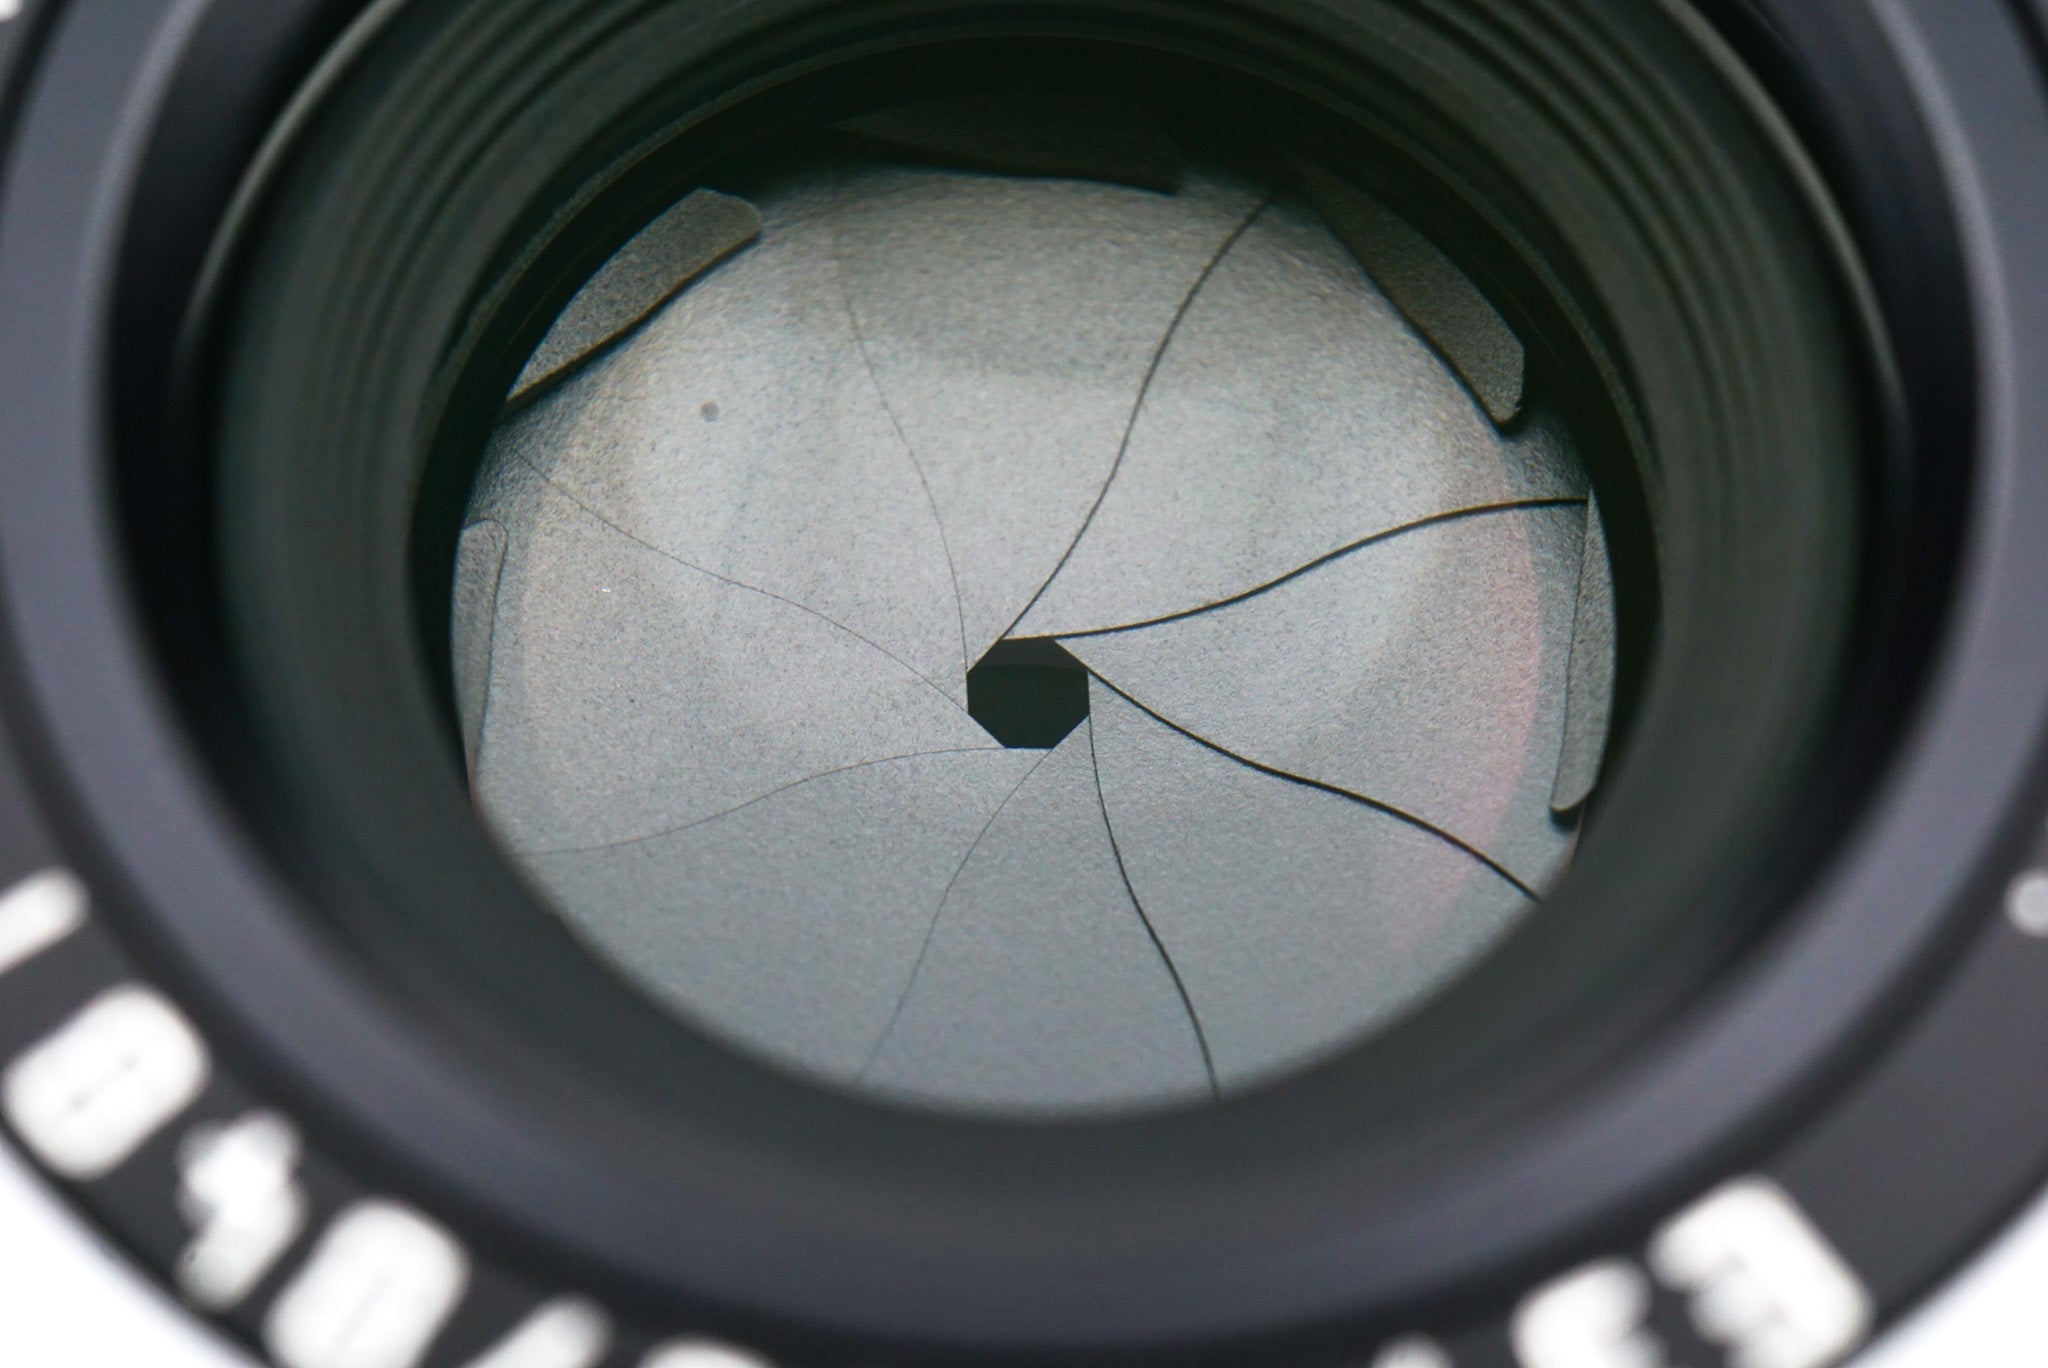 Leica 35mm f2 Summicron ASPH. (11608) – Kamerastore